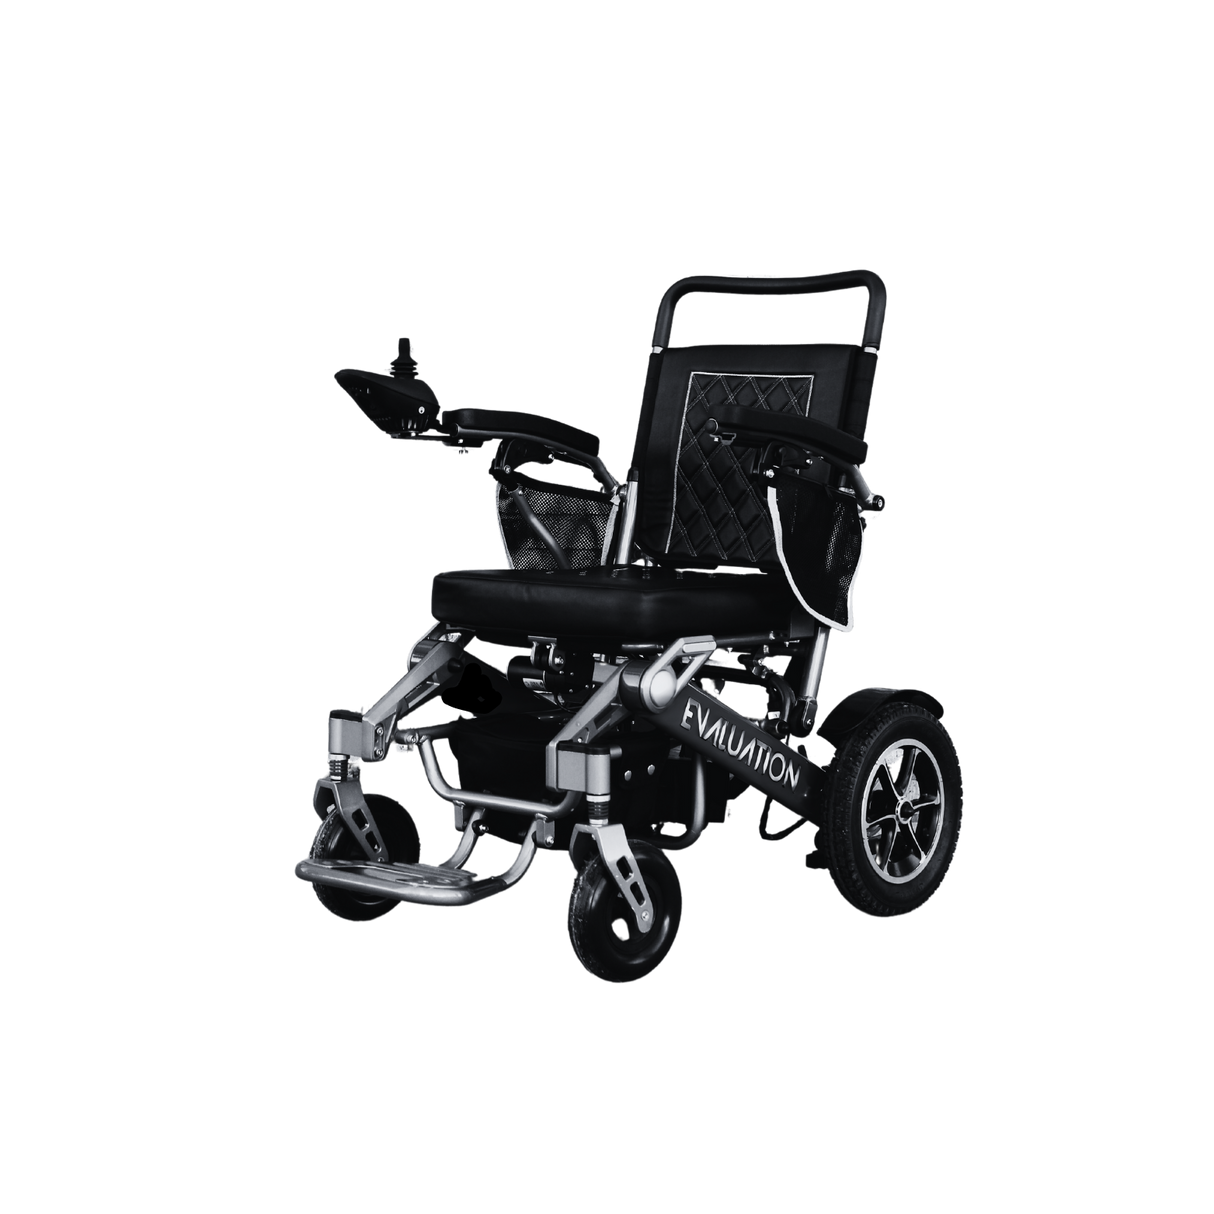 Open Box Evaluation Evolution Lightweight Folding Electric Wheelchair